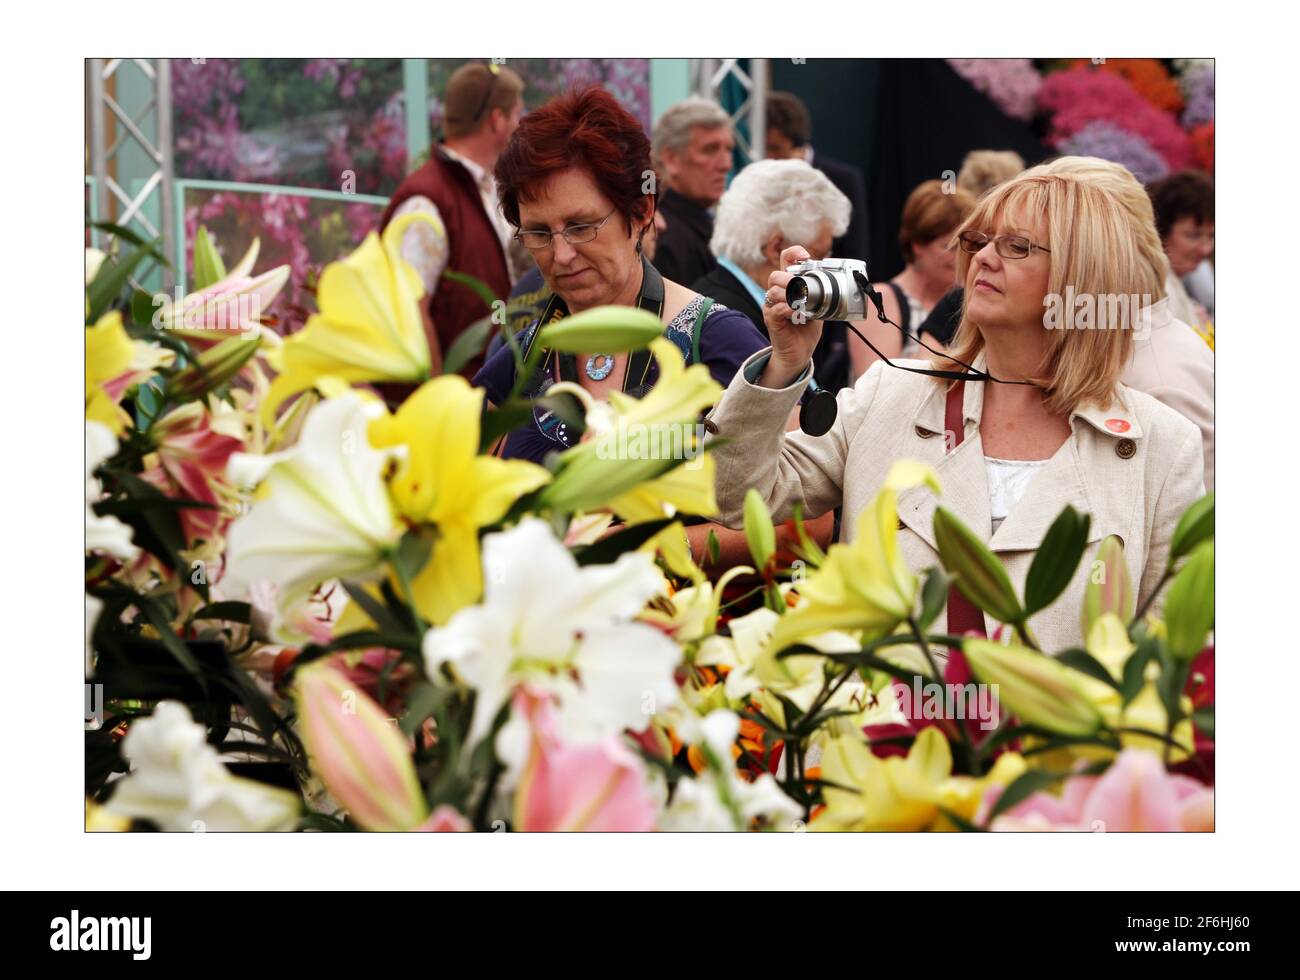 Flores finas fotografías e imágenes de alta resolución - Alamy